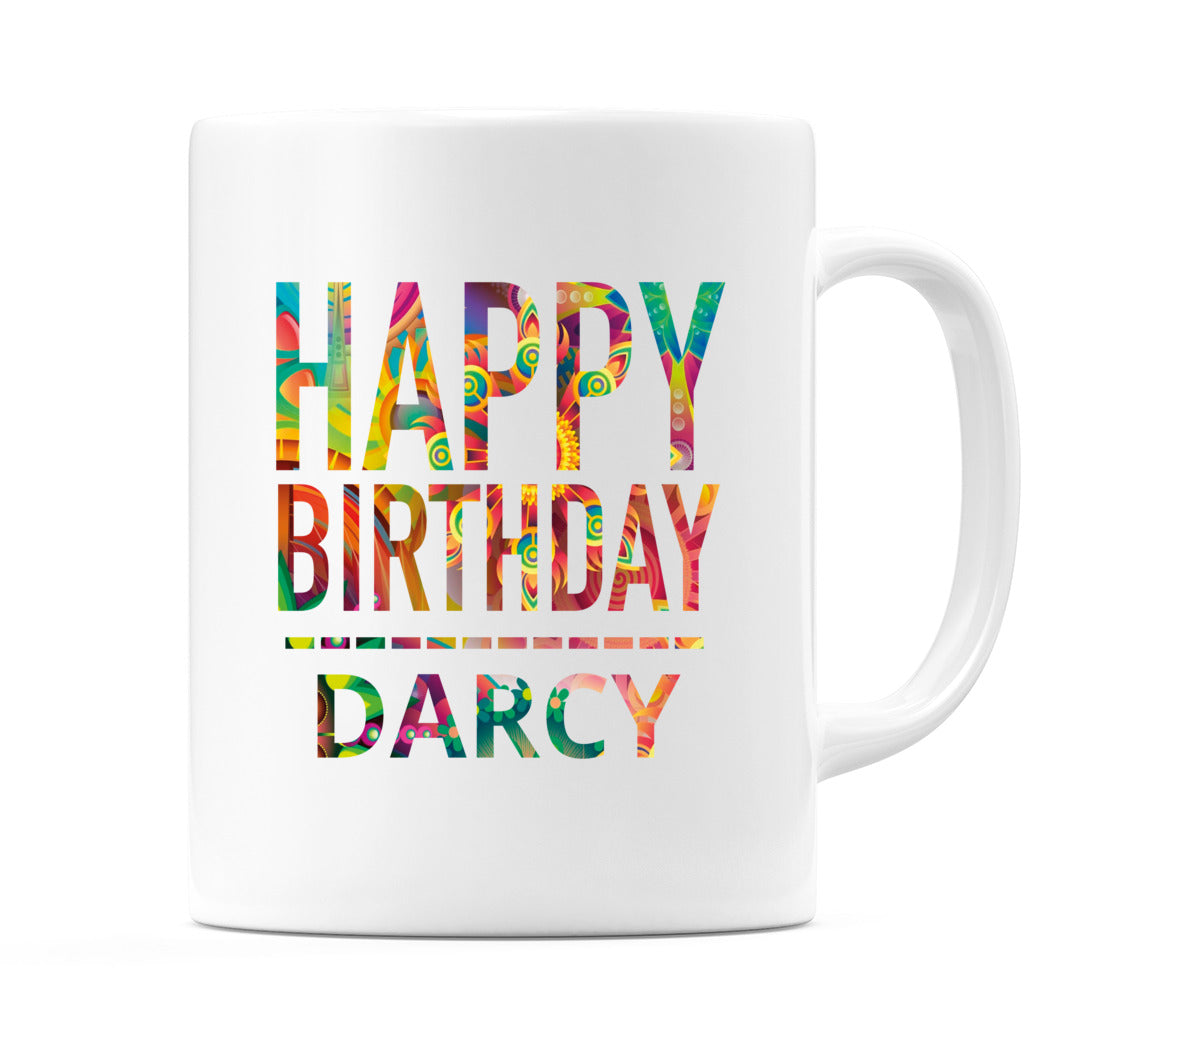 Happy Birthday Darcy (Tie Dye Effect) Mug Cup by WeDoMugs